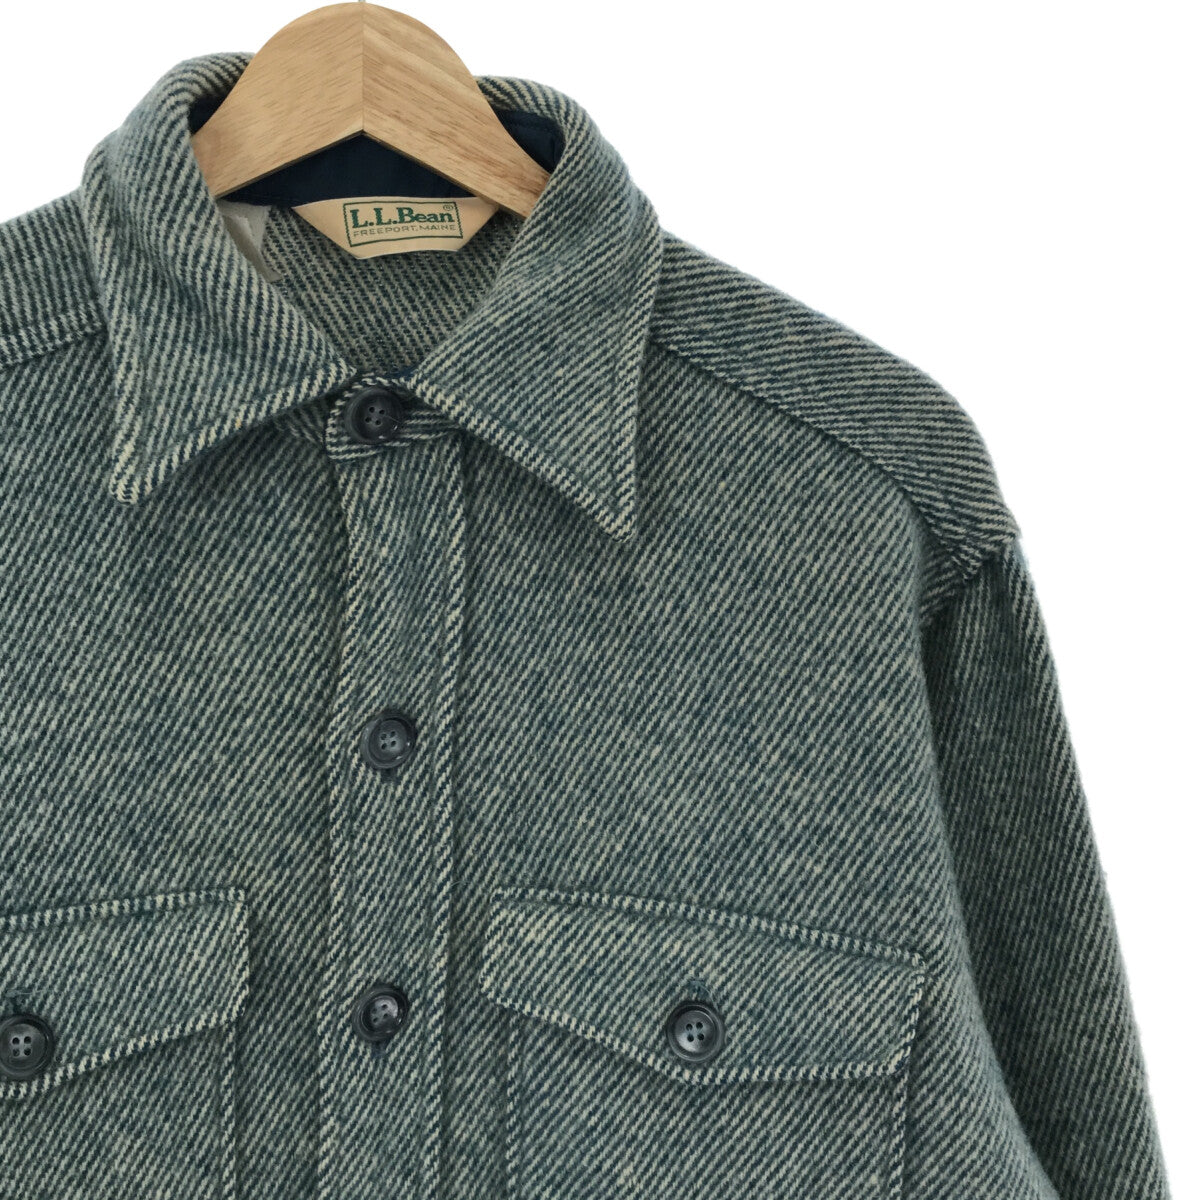 70s70s vintage L.L.Bean wool jacket エルエルビーン